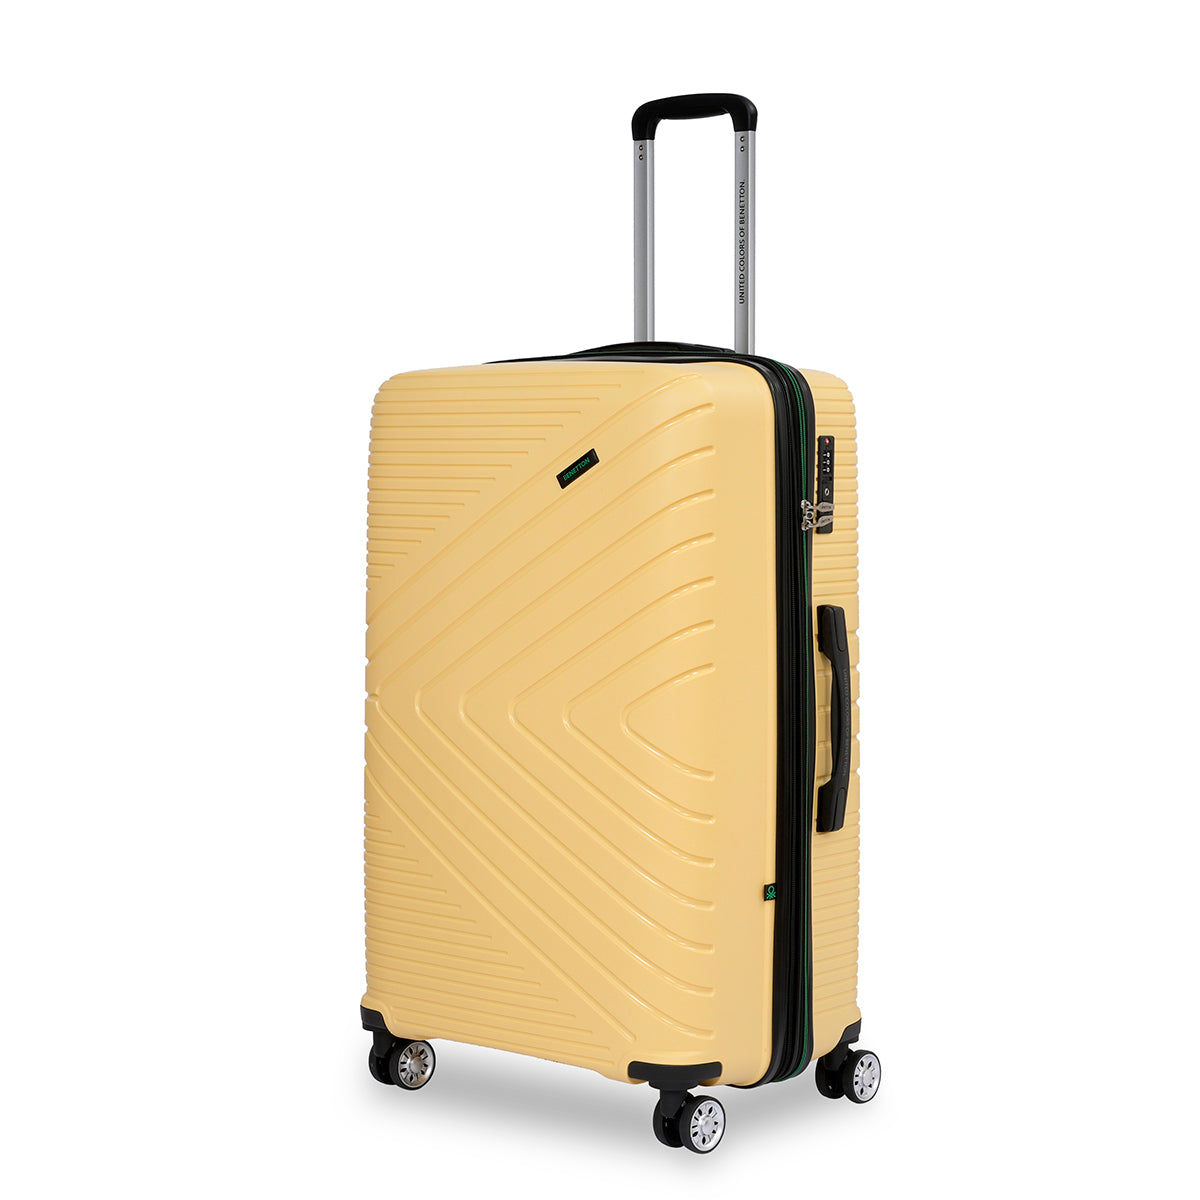 United Colors of Benetton Jasper Hard Luggage yellow